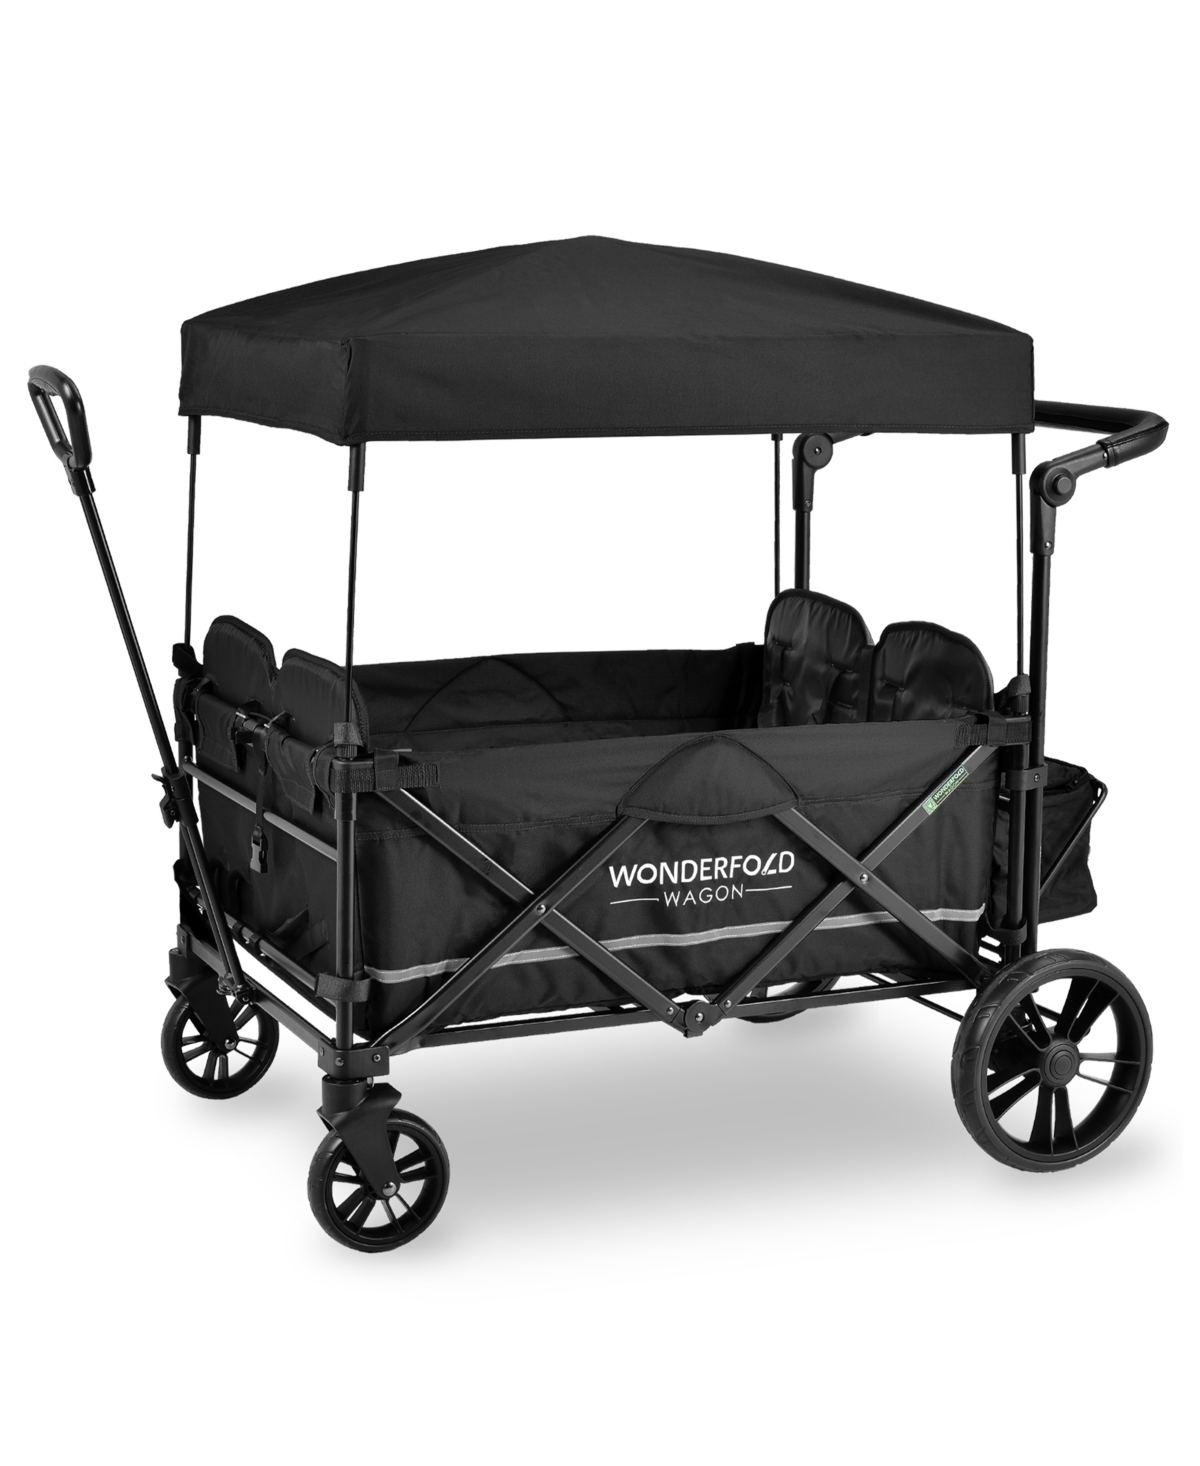 Wonderfold Wagon X4 Push And Pull Quad Stroller Wagon In Pitch Black